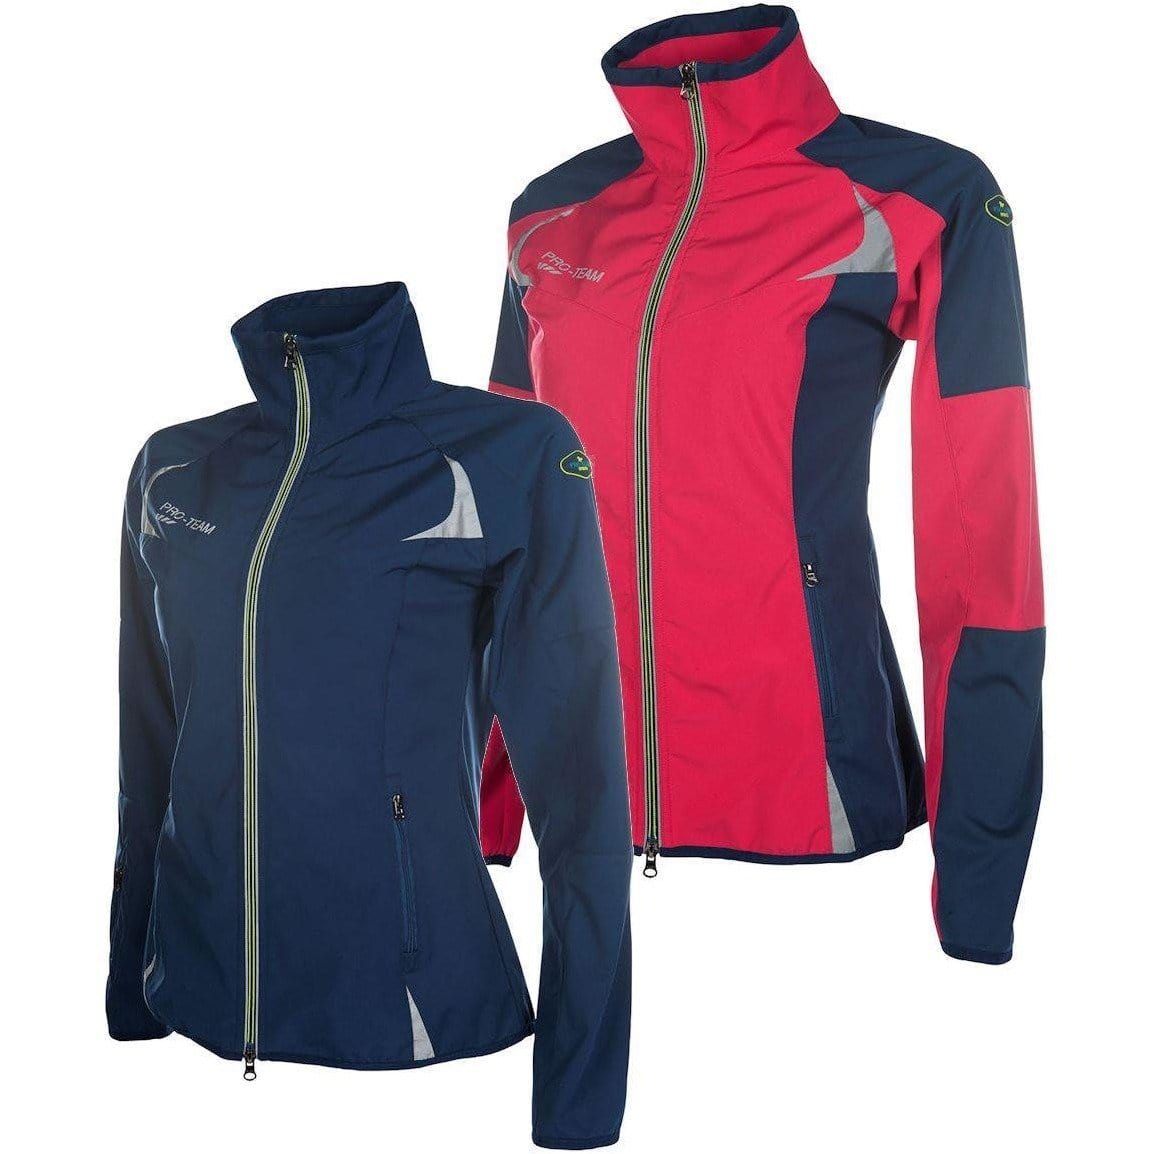 Pro Team Softshell Jacket Neon Sports